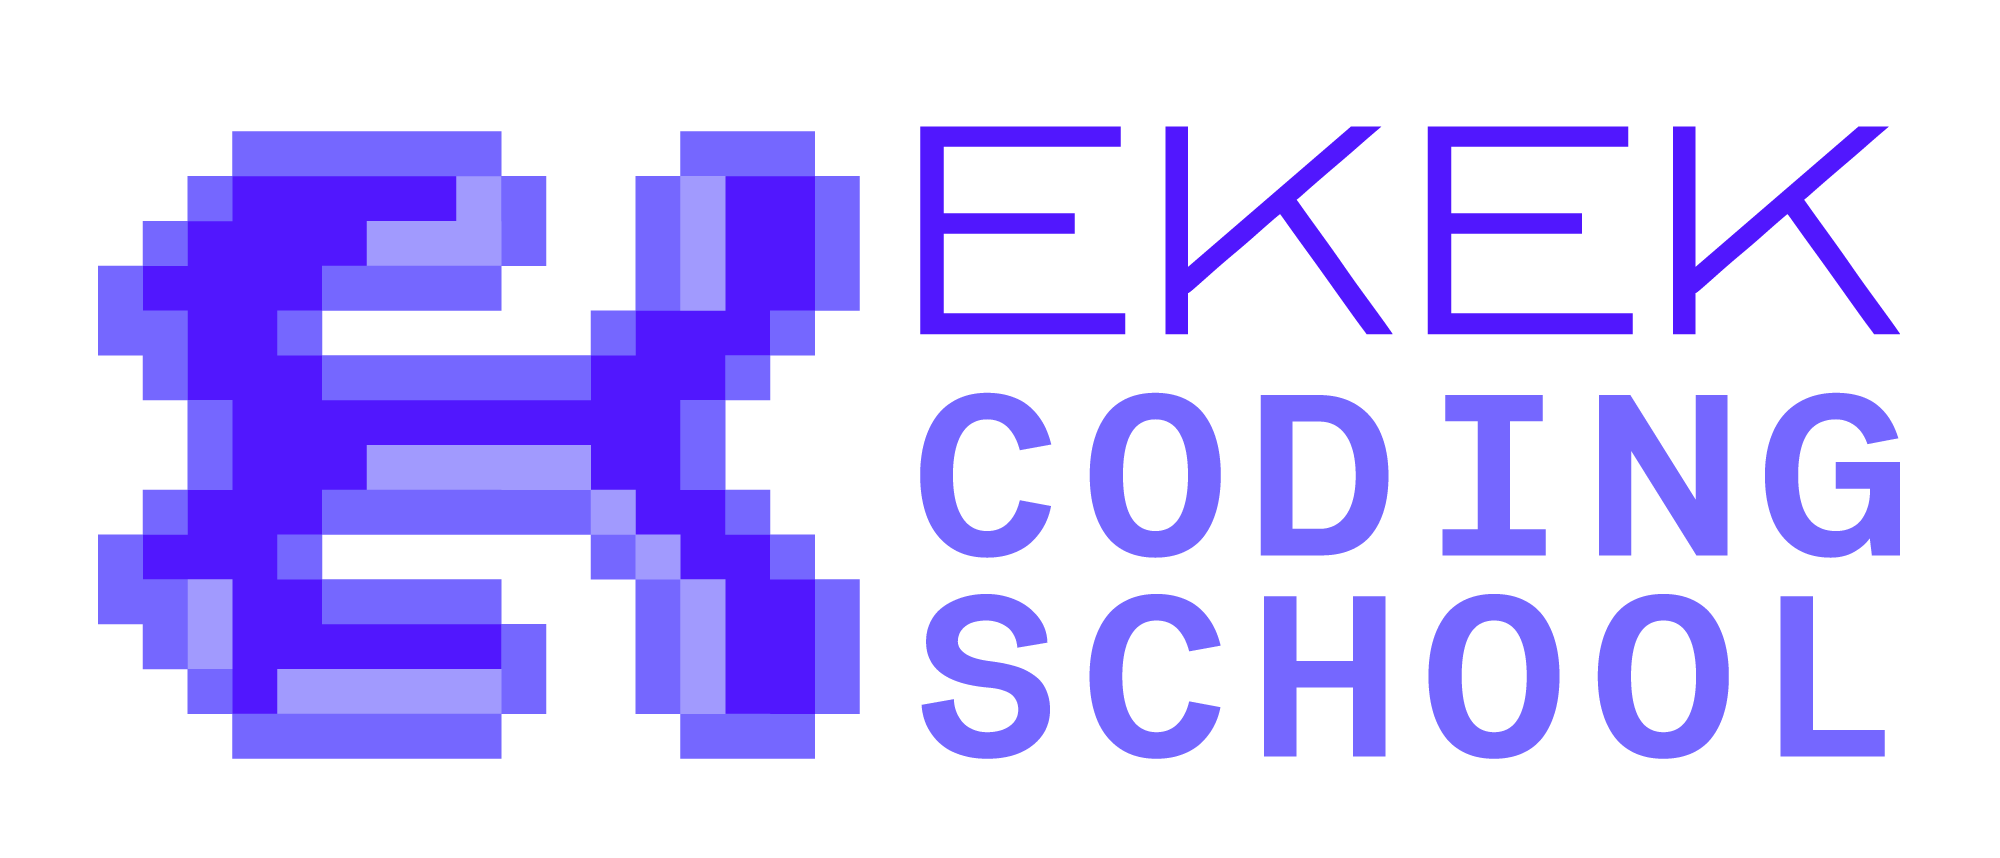 EKEK coding school